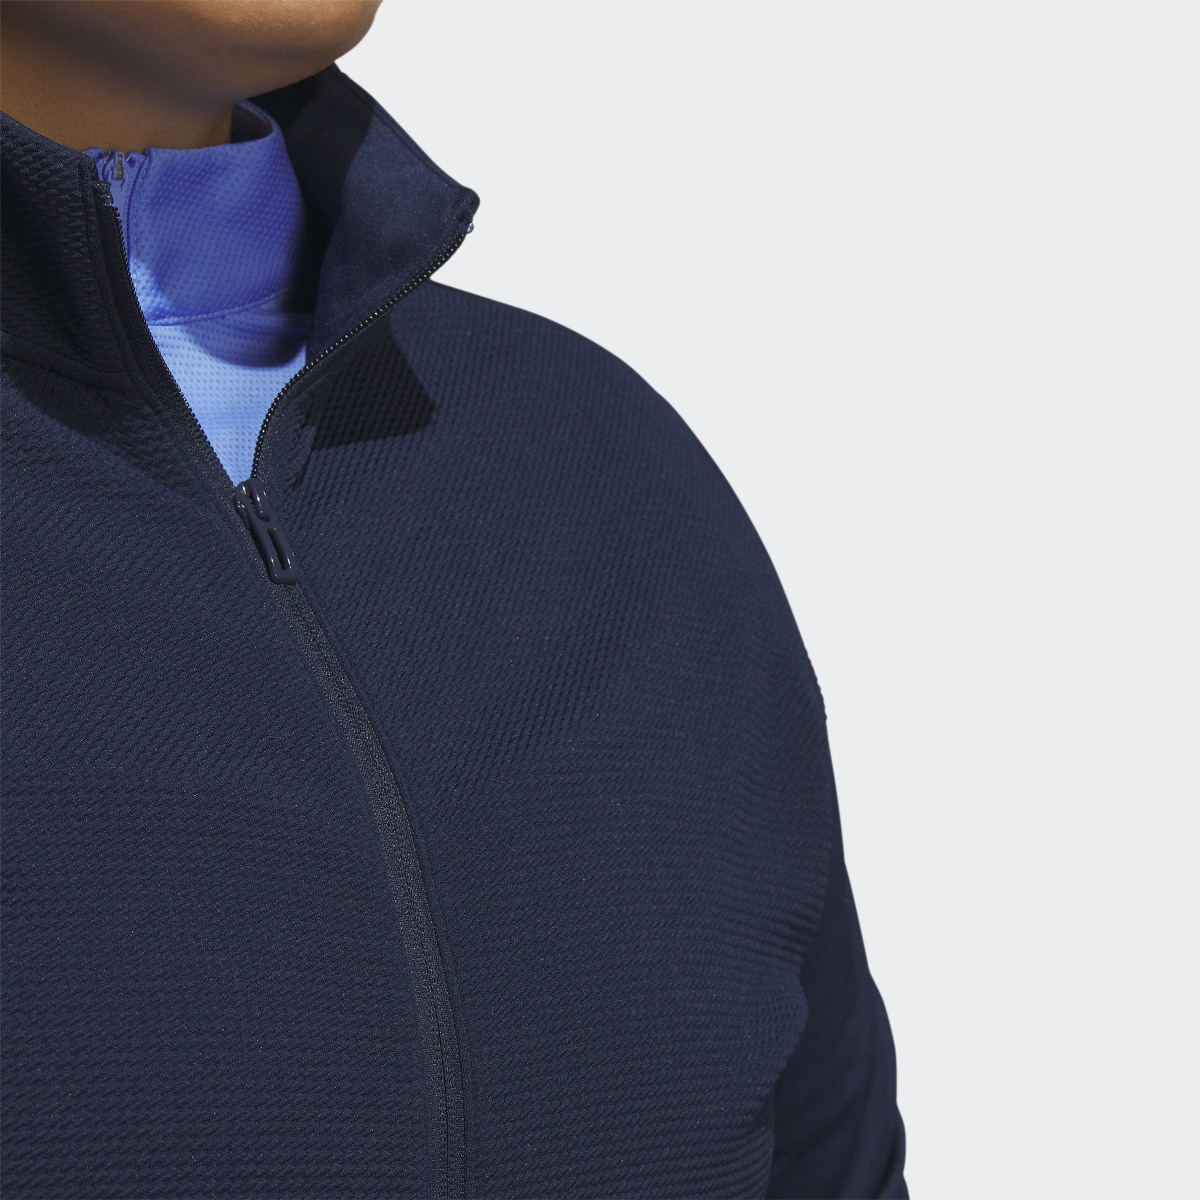 Adidas Textured Full-Zip Jacket (Plus Size). 7